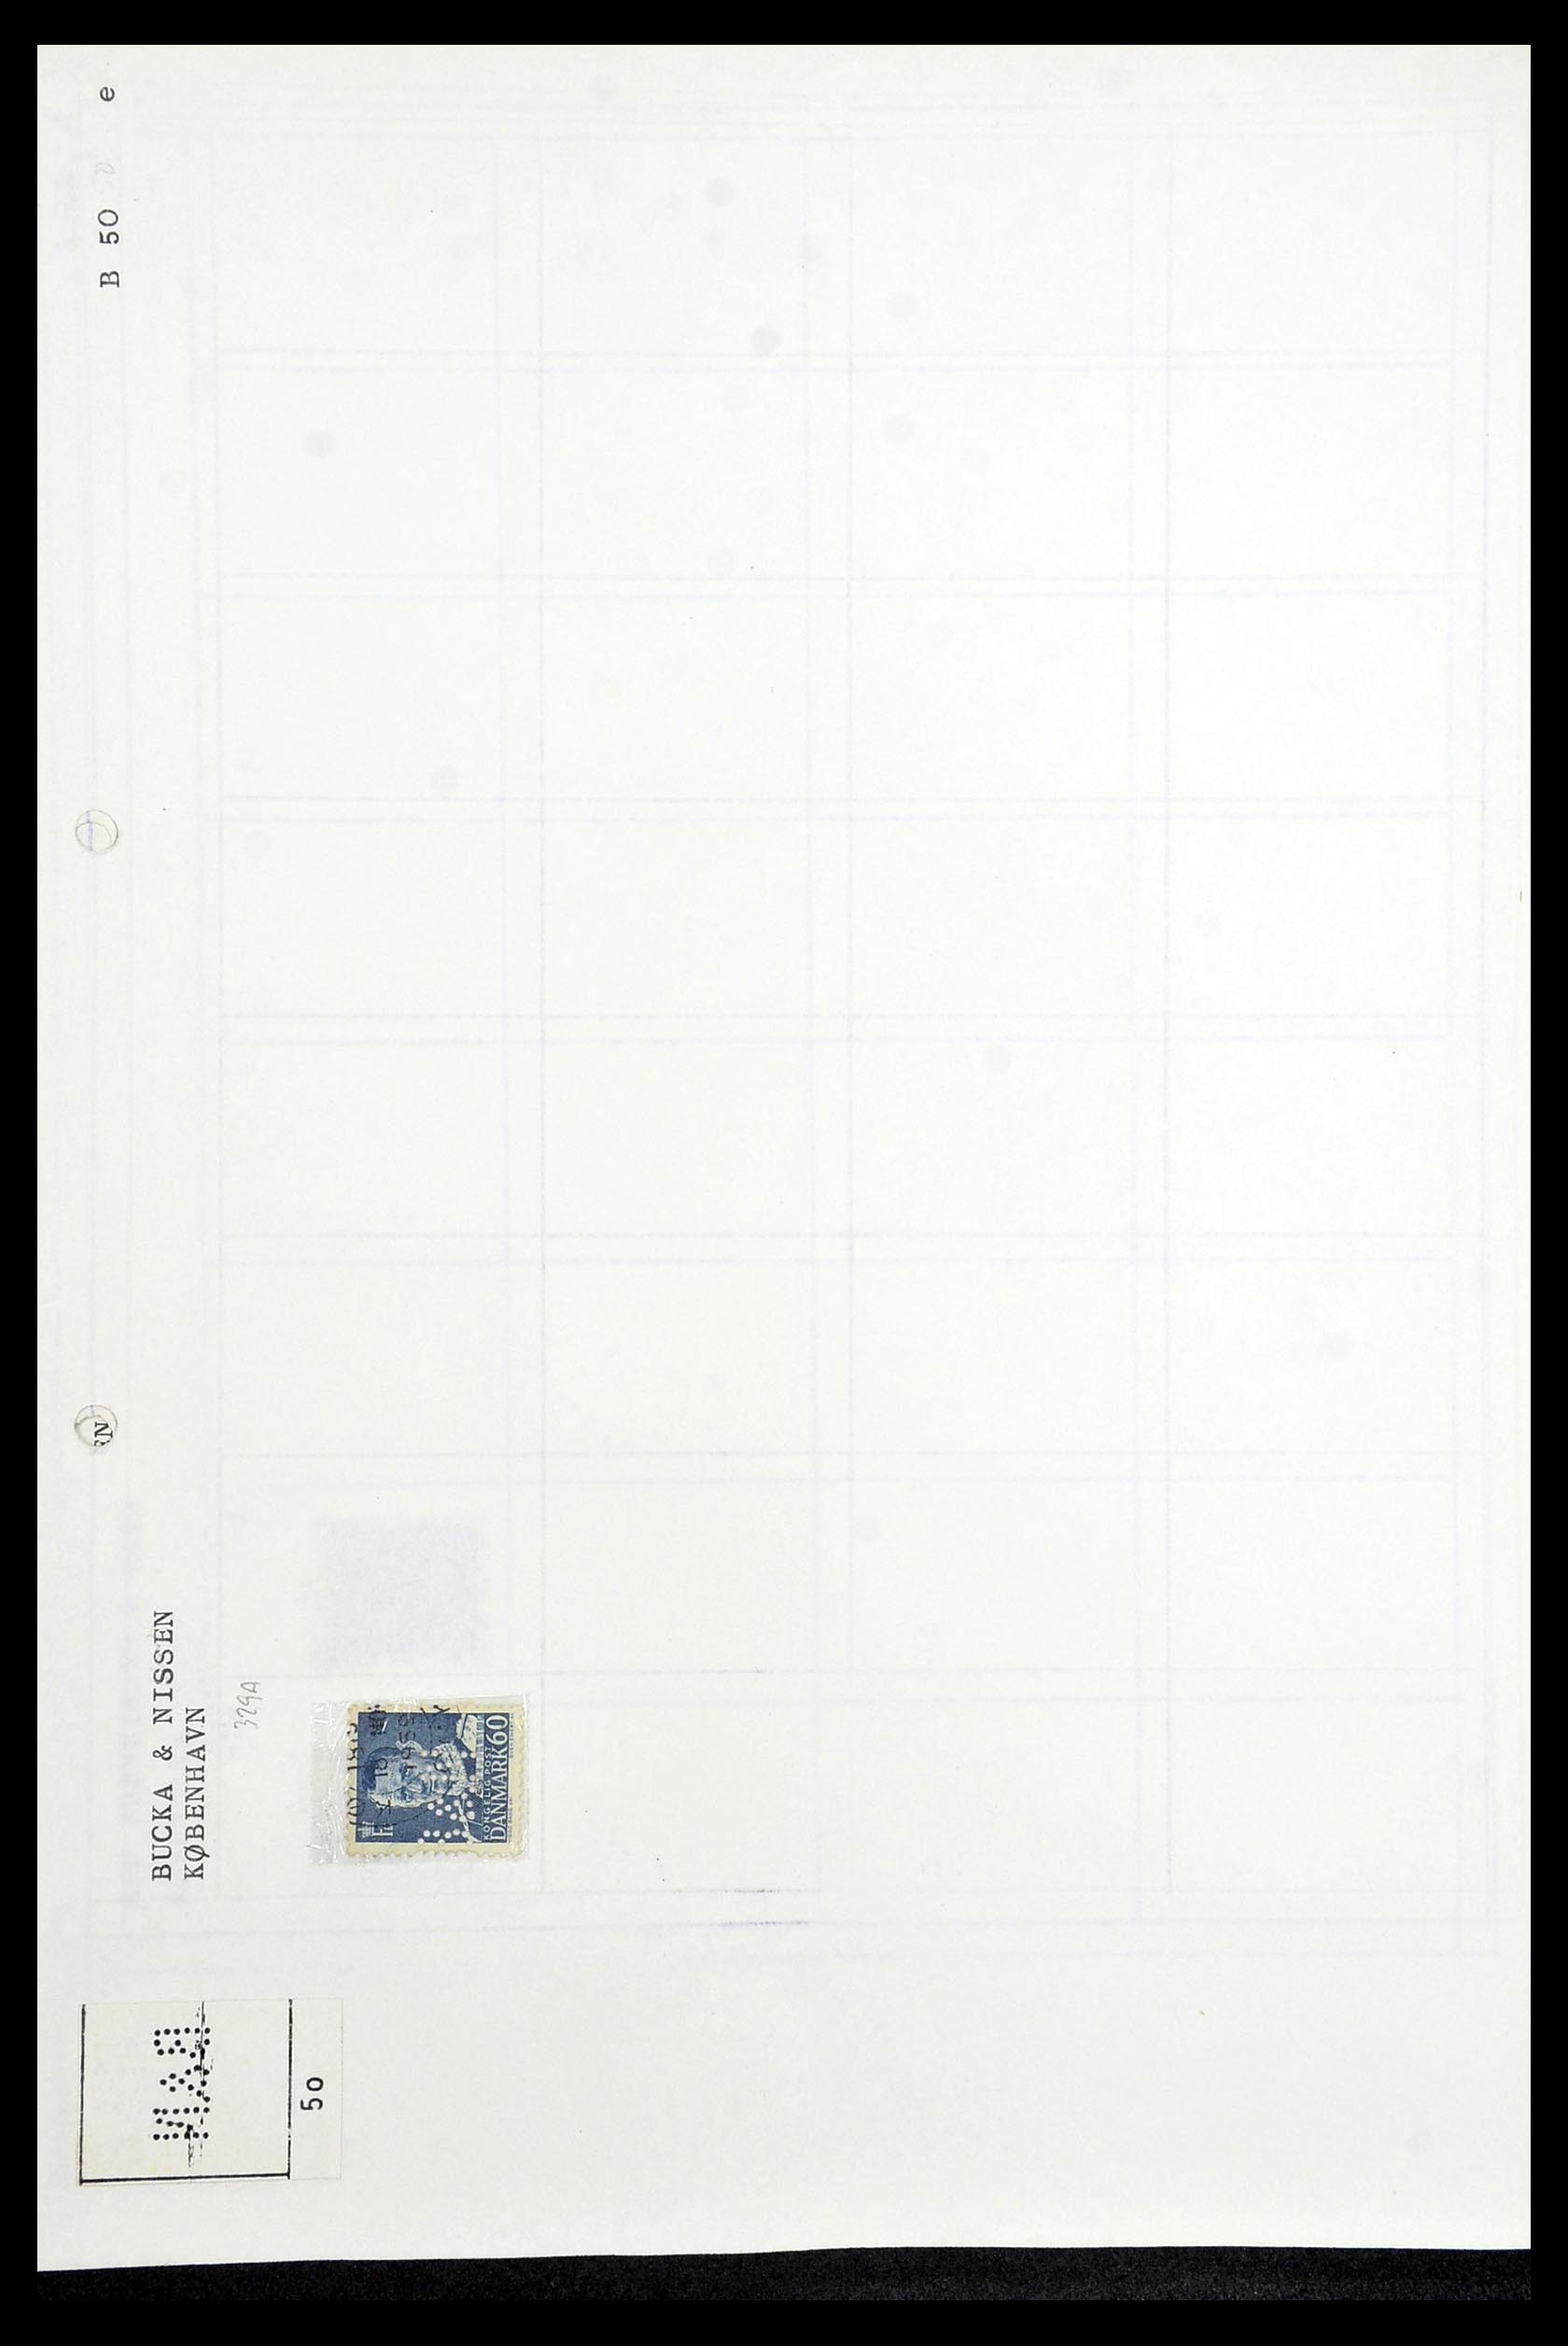 34415 034 - Stamp Collection 34415 Denmark perfins 1875-1980.